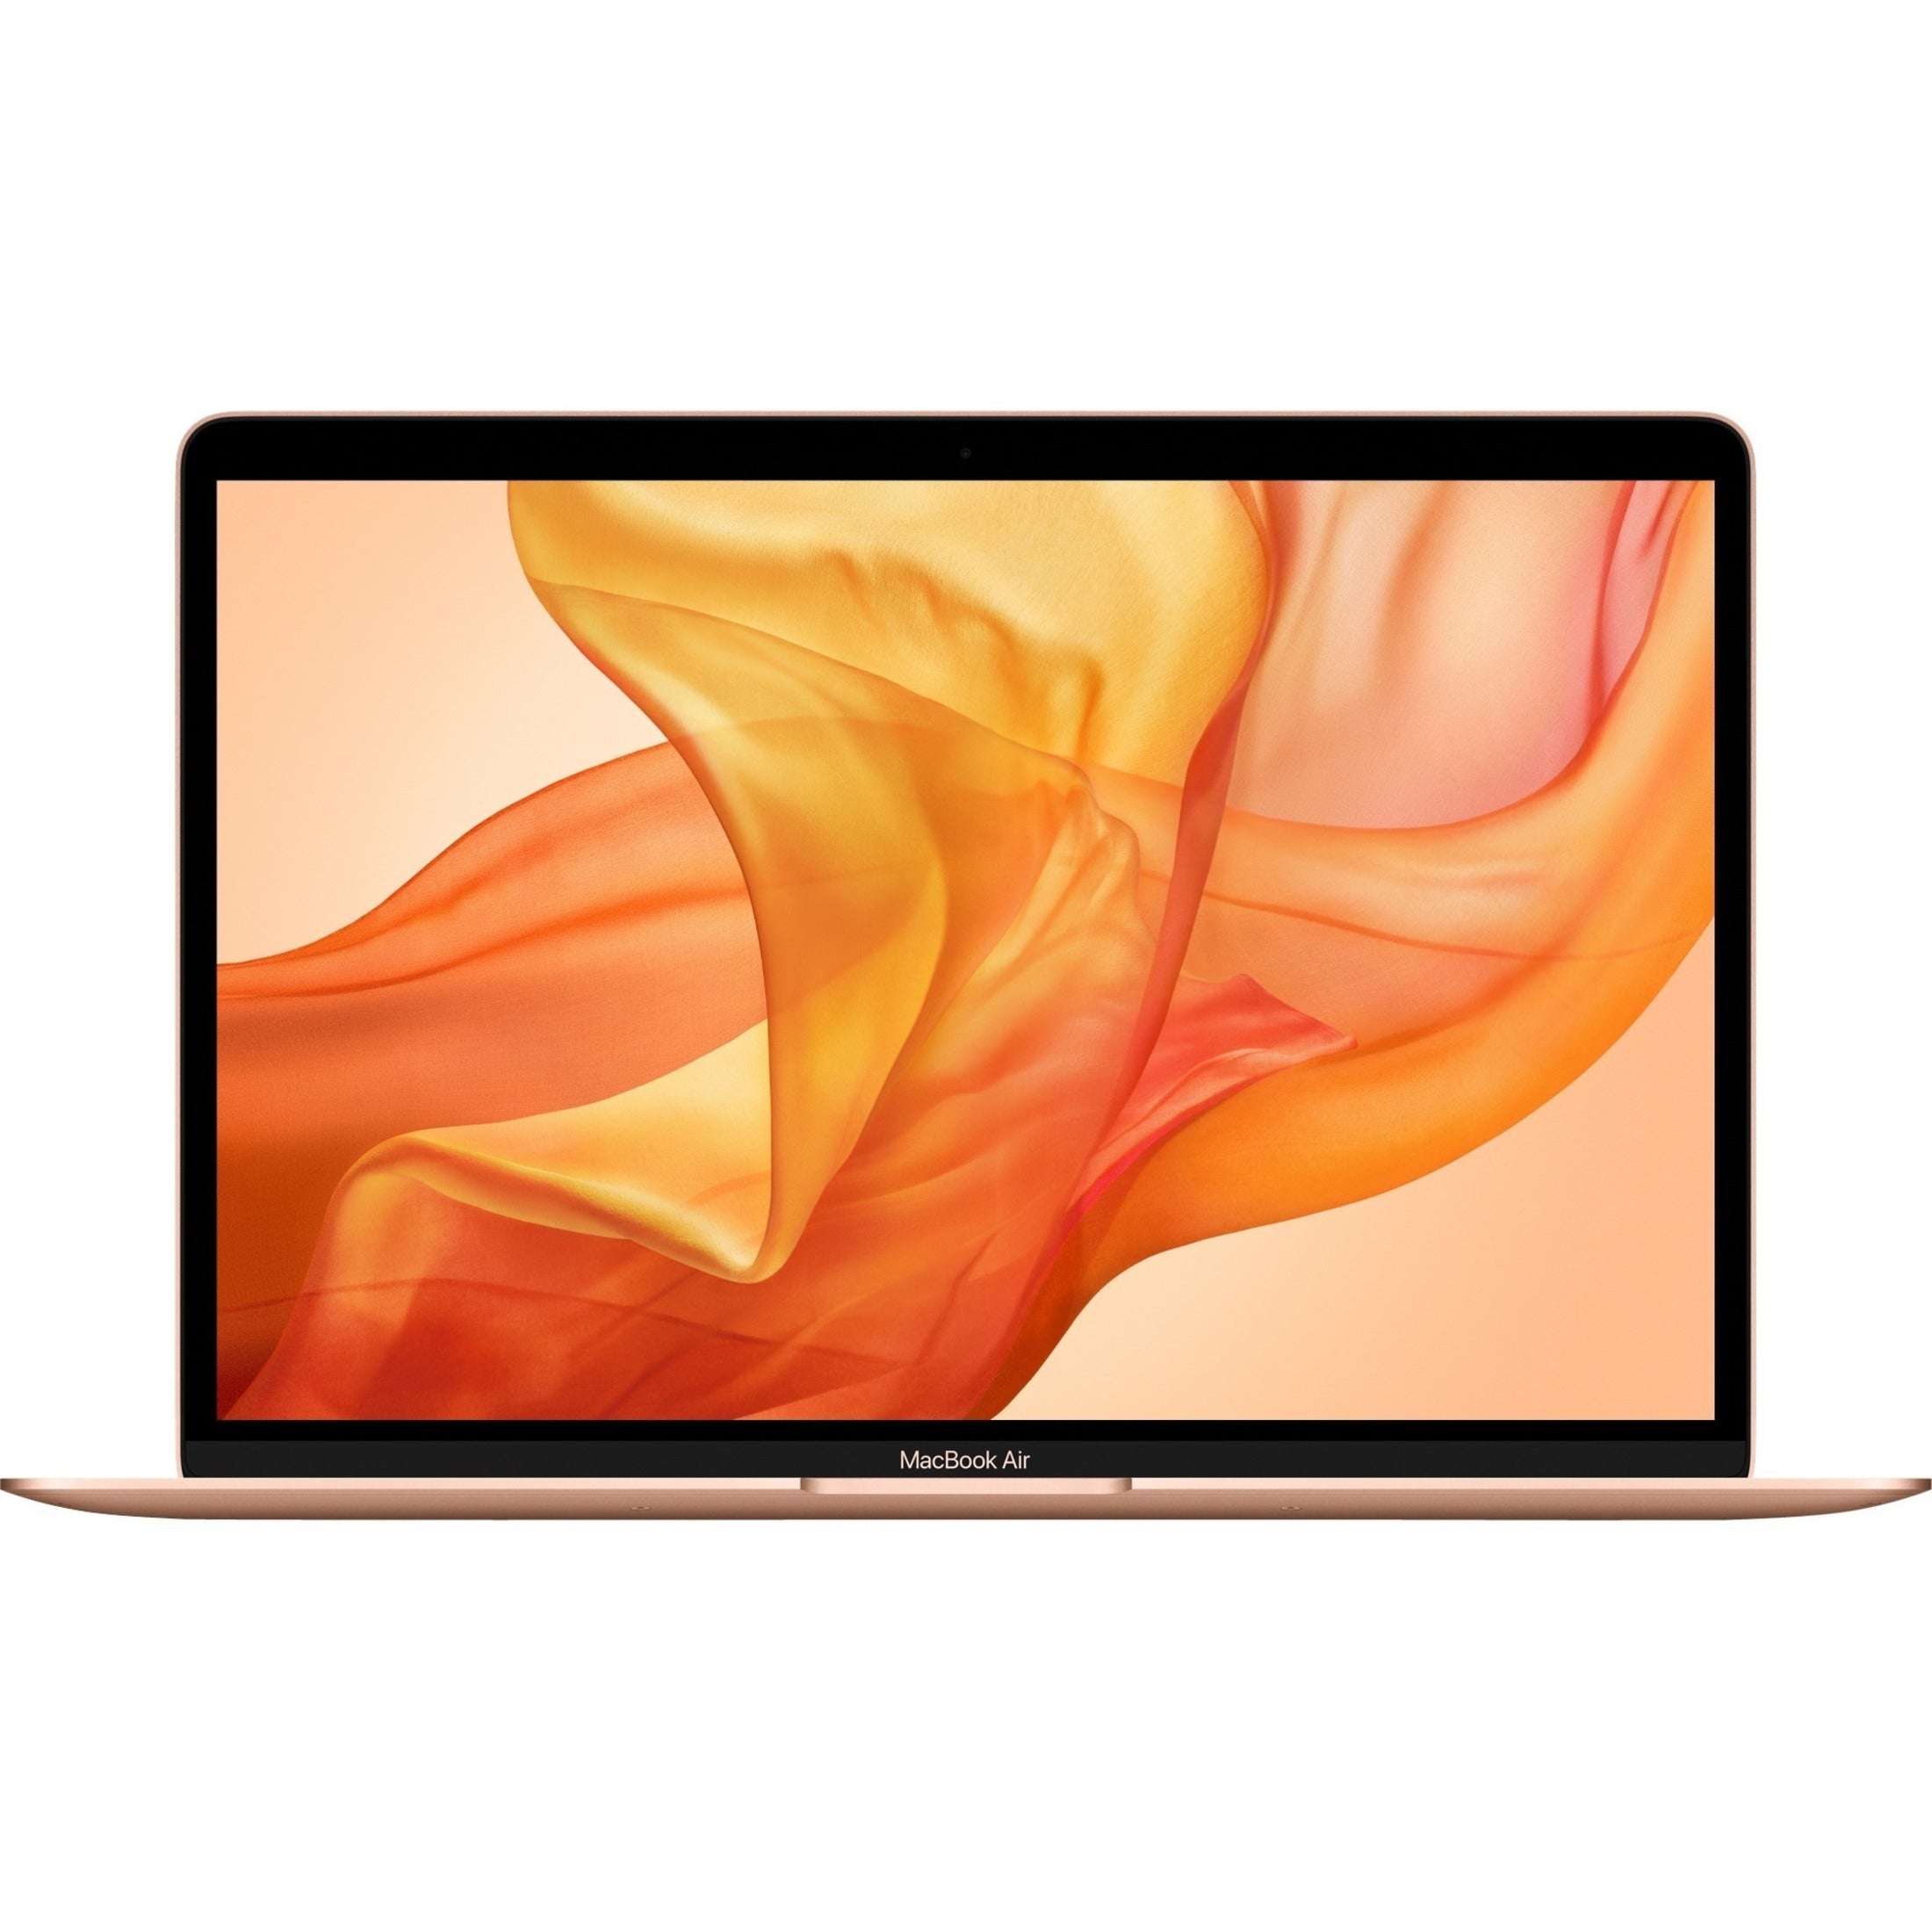 Apple MVFN2LL/A MacBook Air 13.3 Gold, Intel Core i5, 8GB RAM, 256GB SSD, macOS Mojave